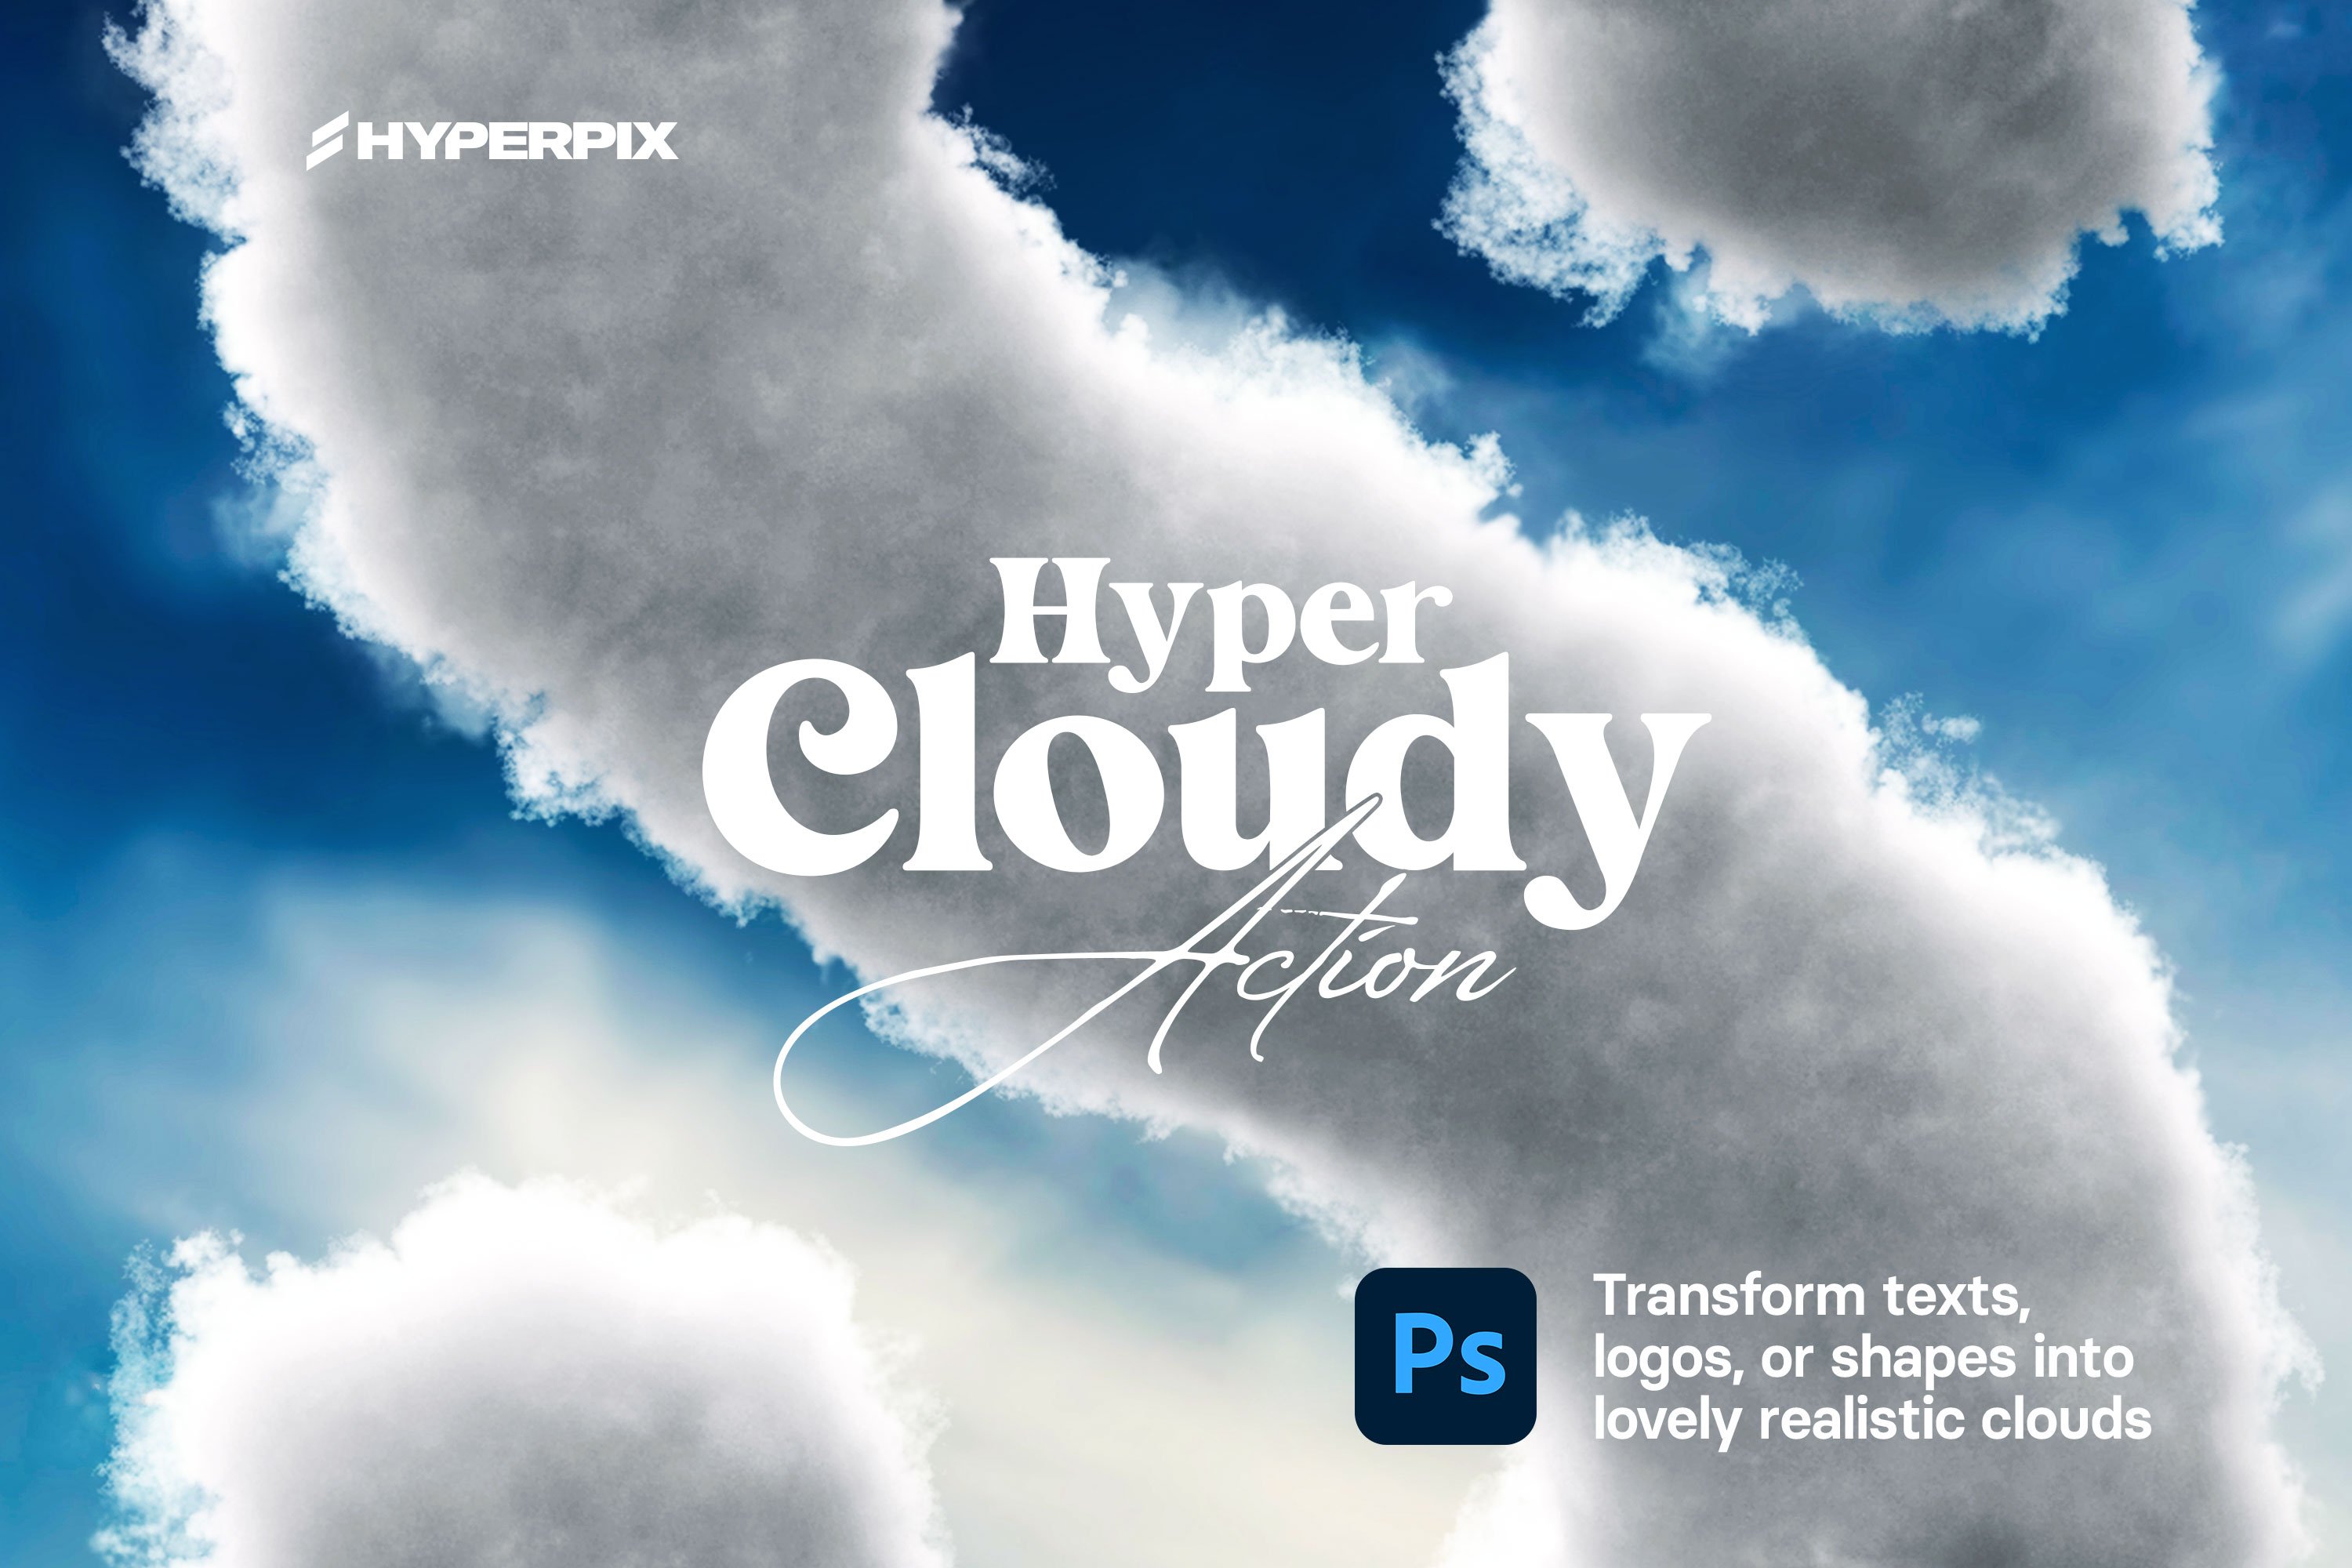 Realistic Photoshop Cloud Effectcover image.